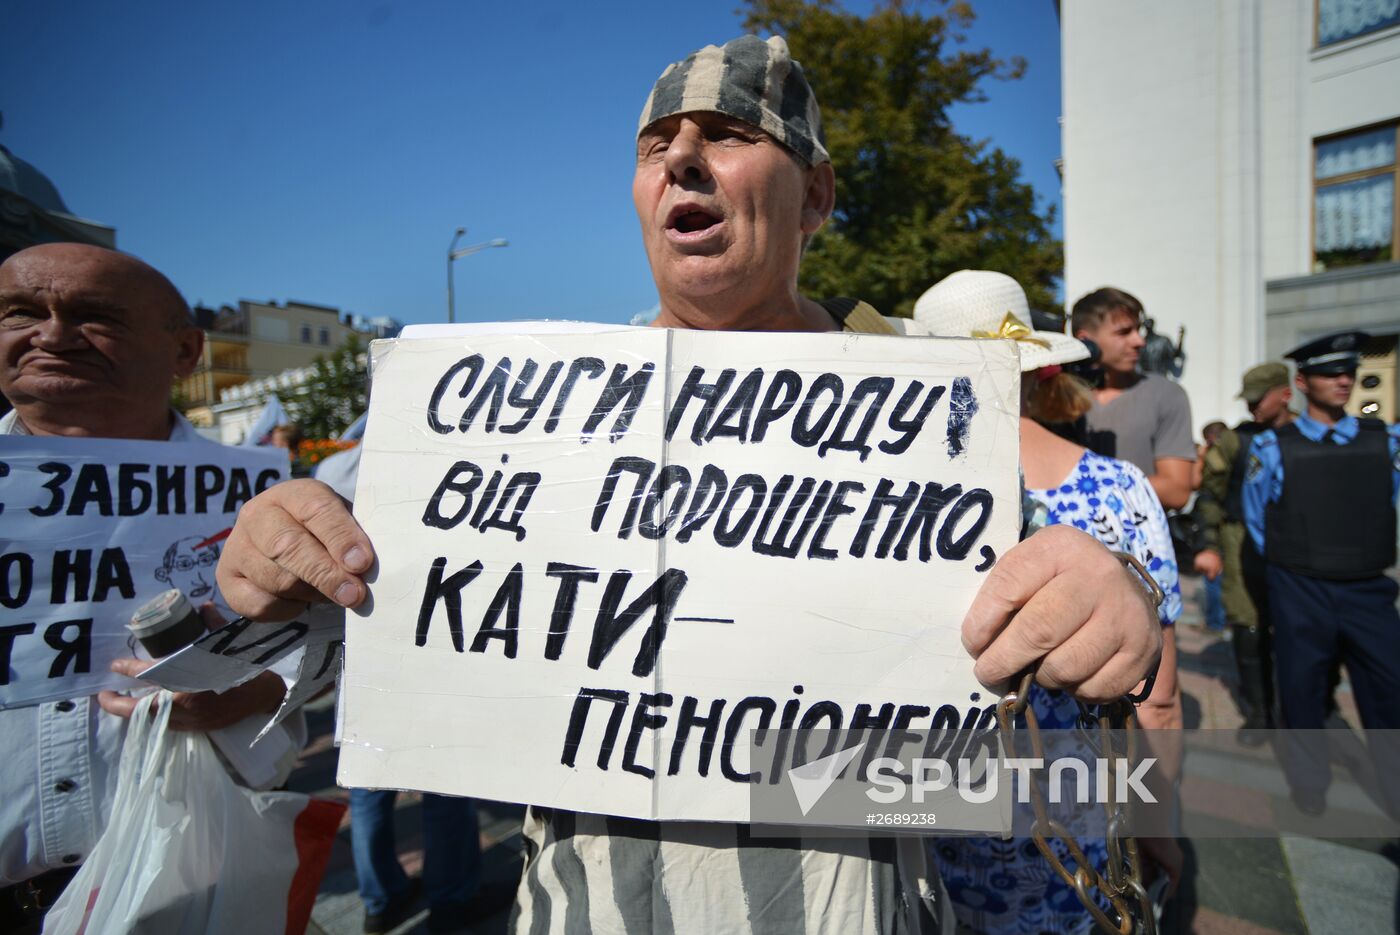 Protest rallies in Kiev